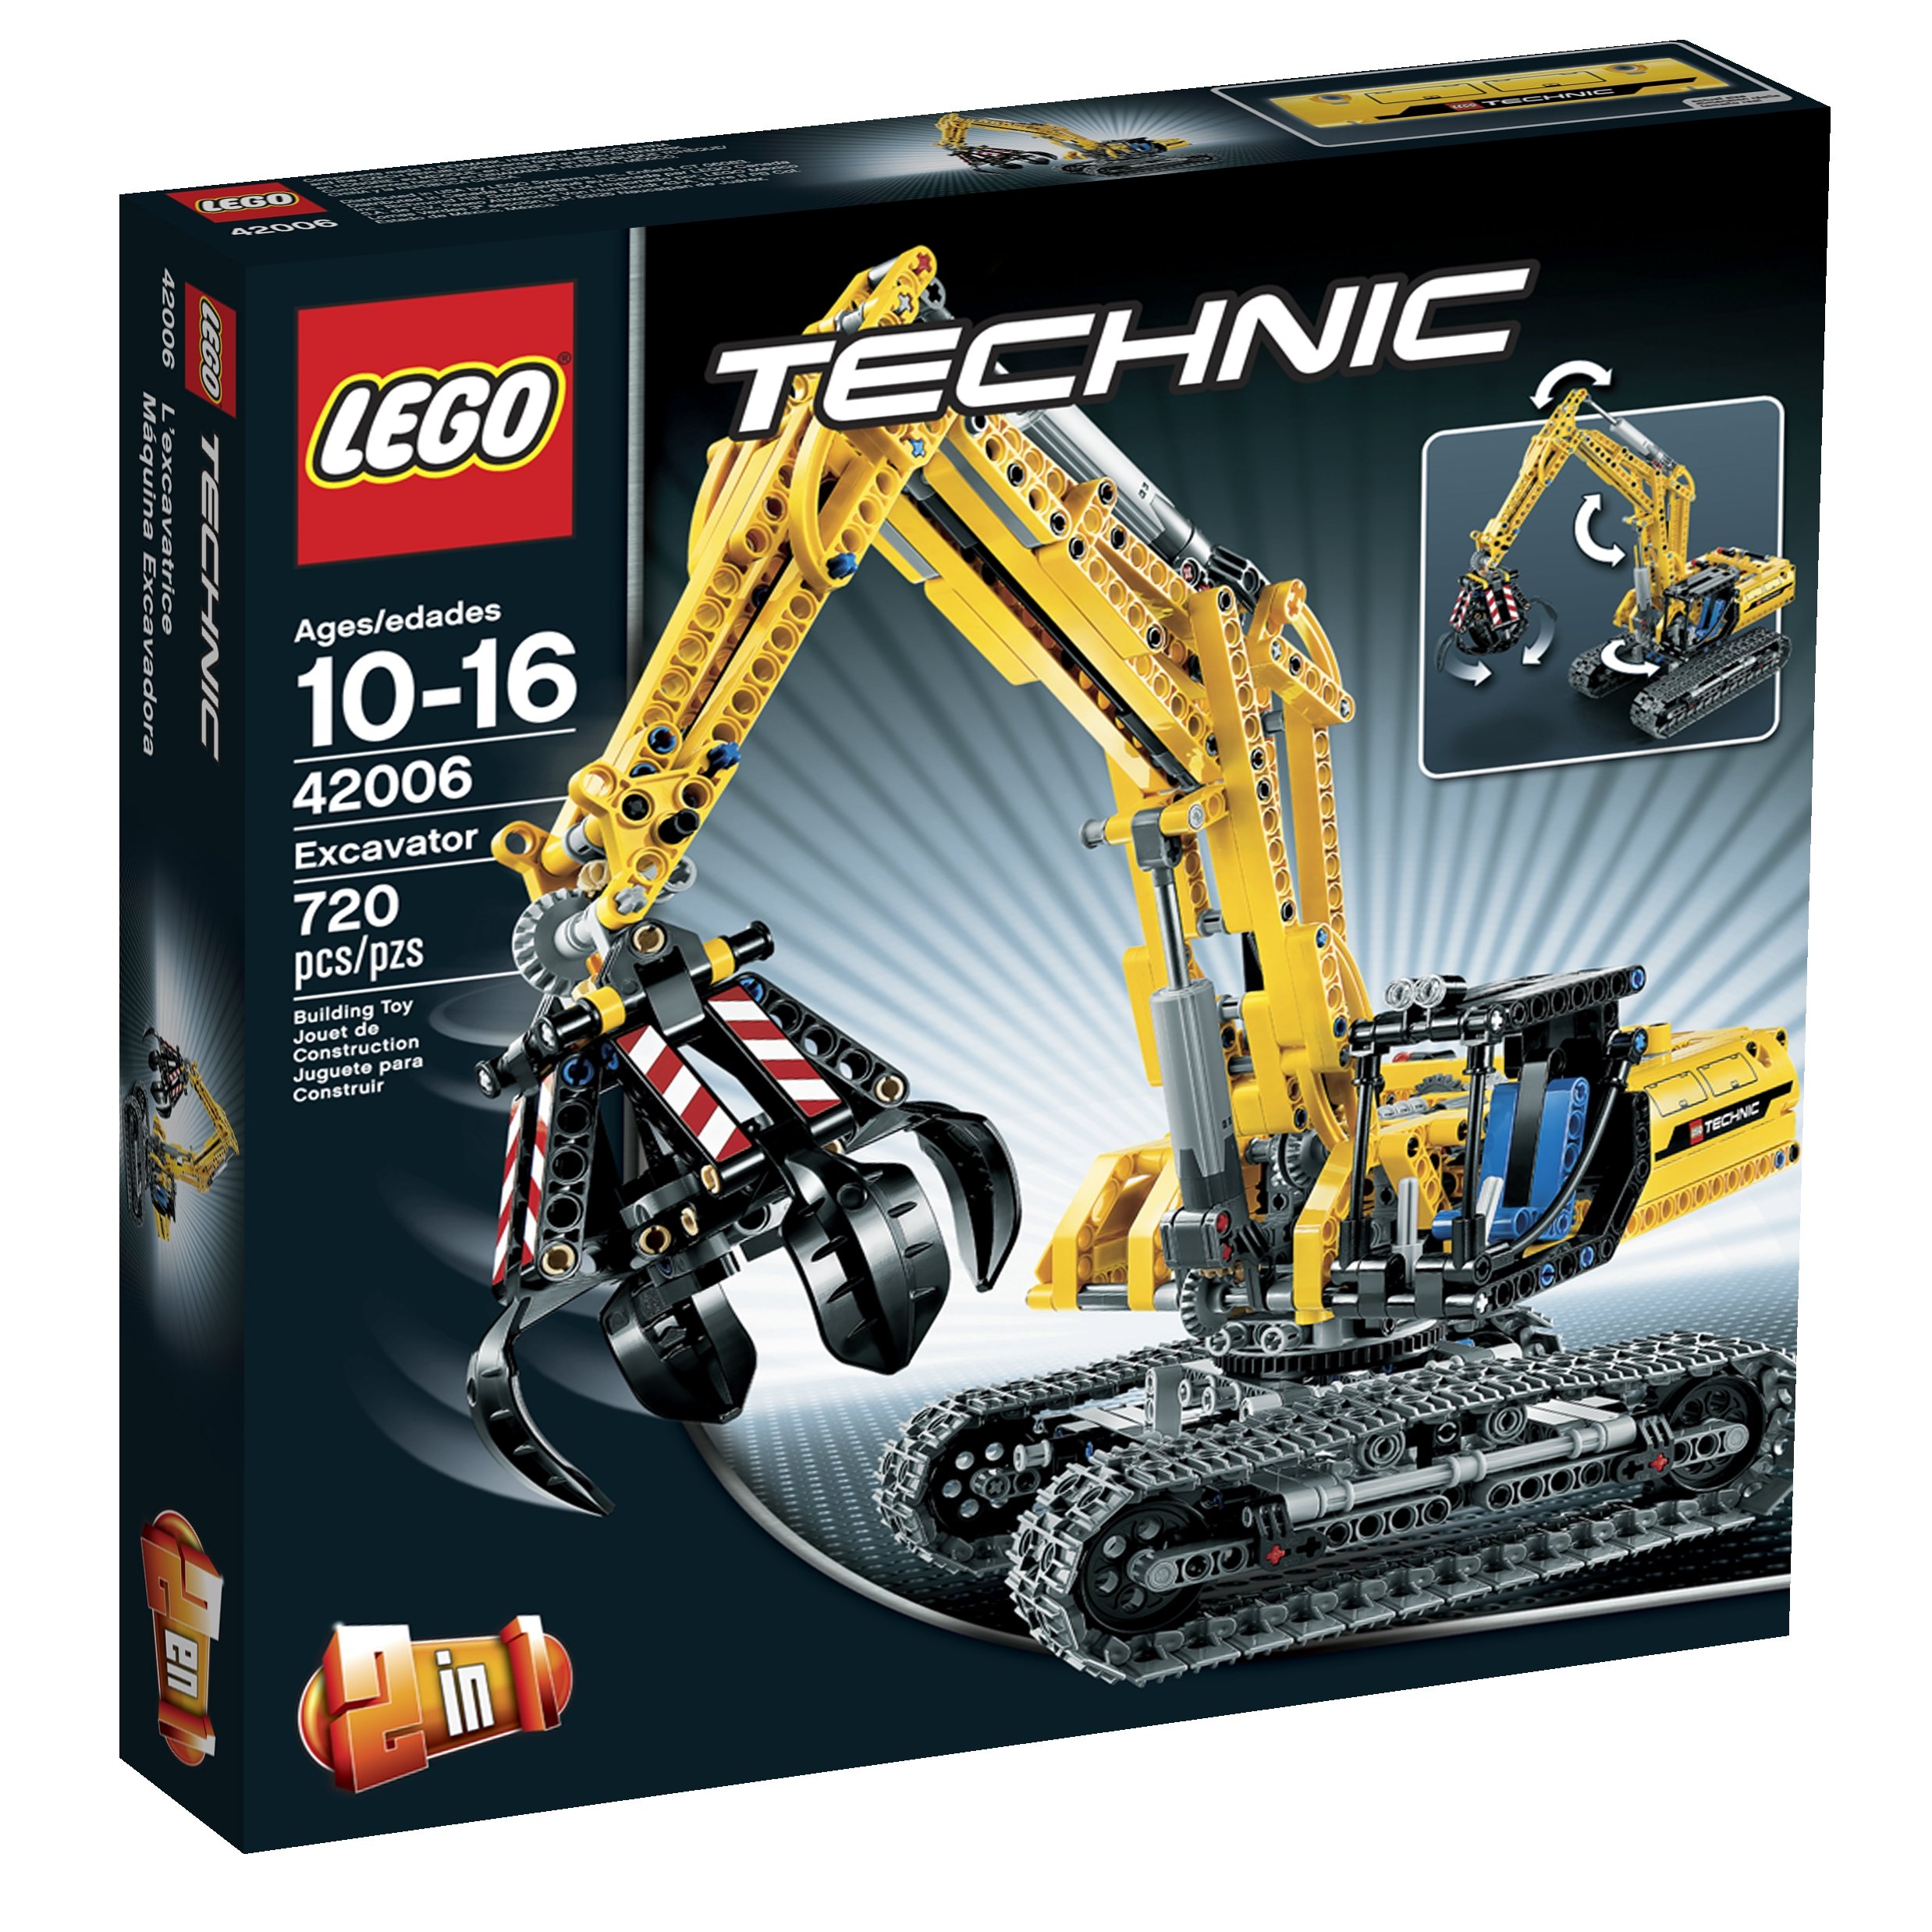 LEGO Technic 42006 Excavator - image 1 of 5